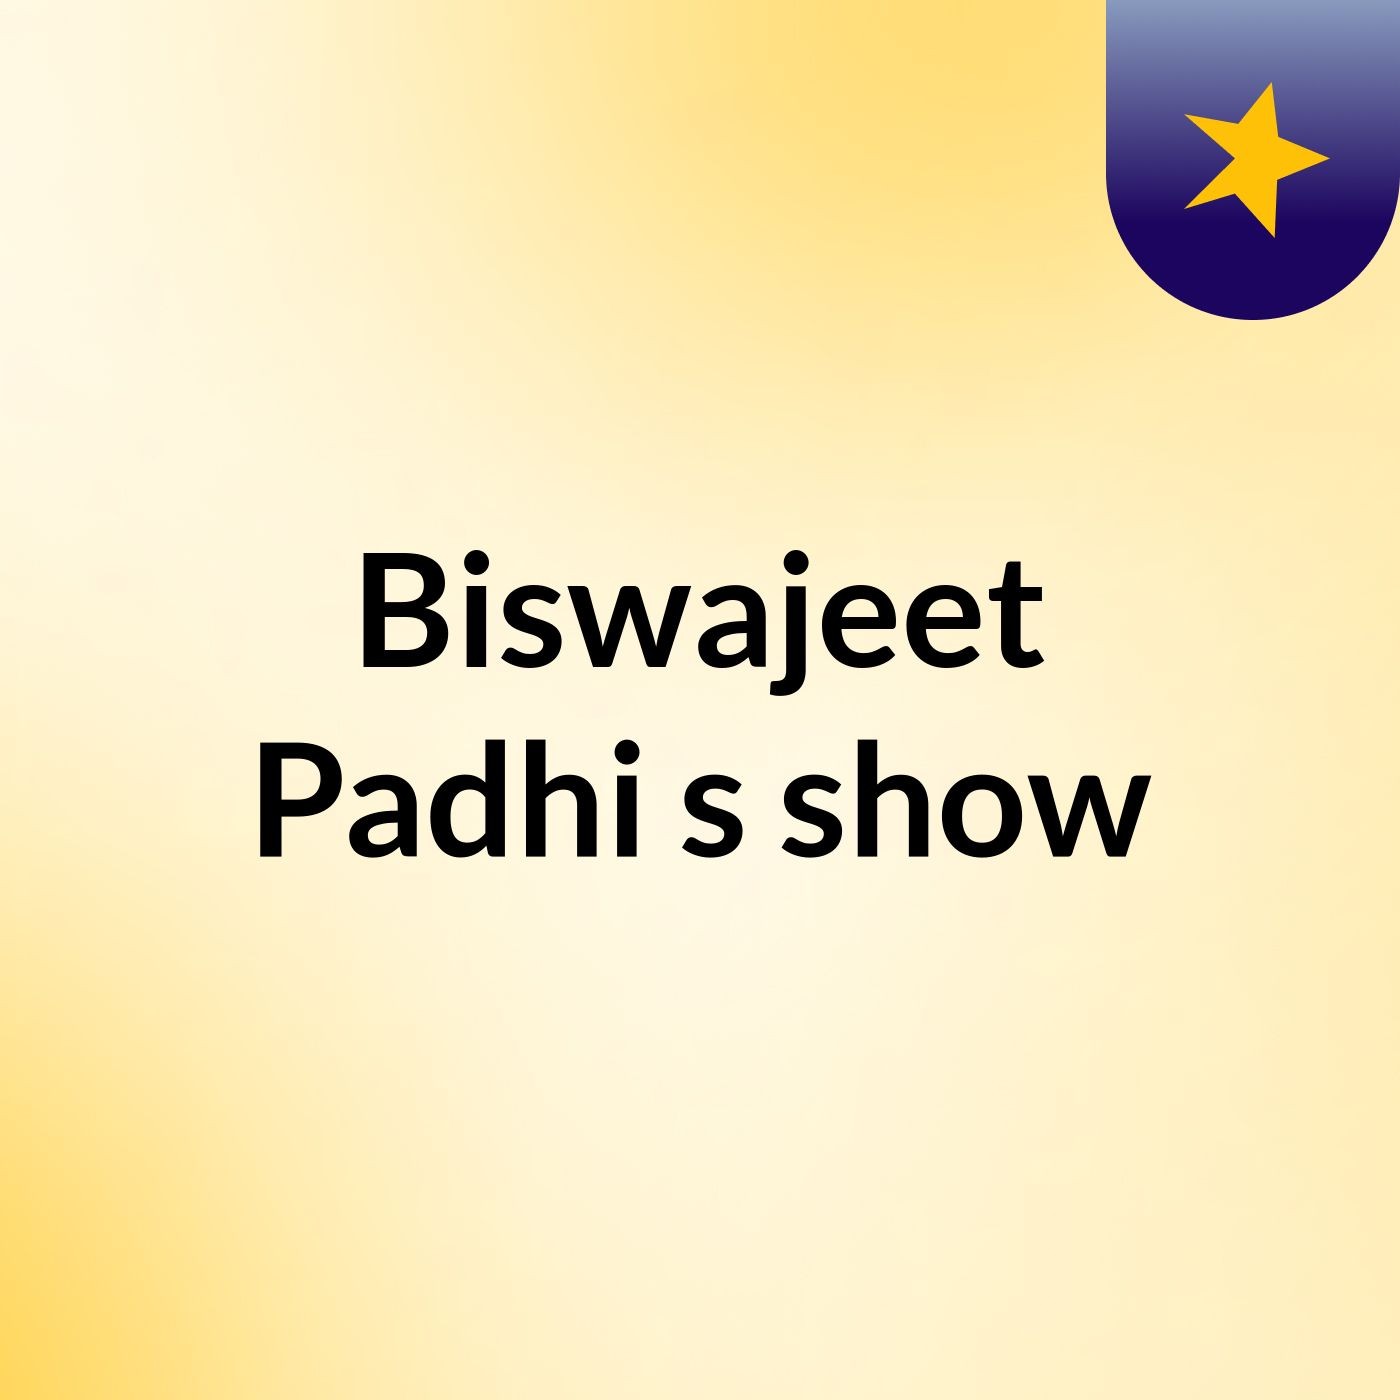 Biswajeet Padhi's show